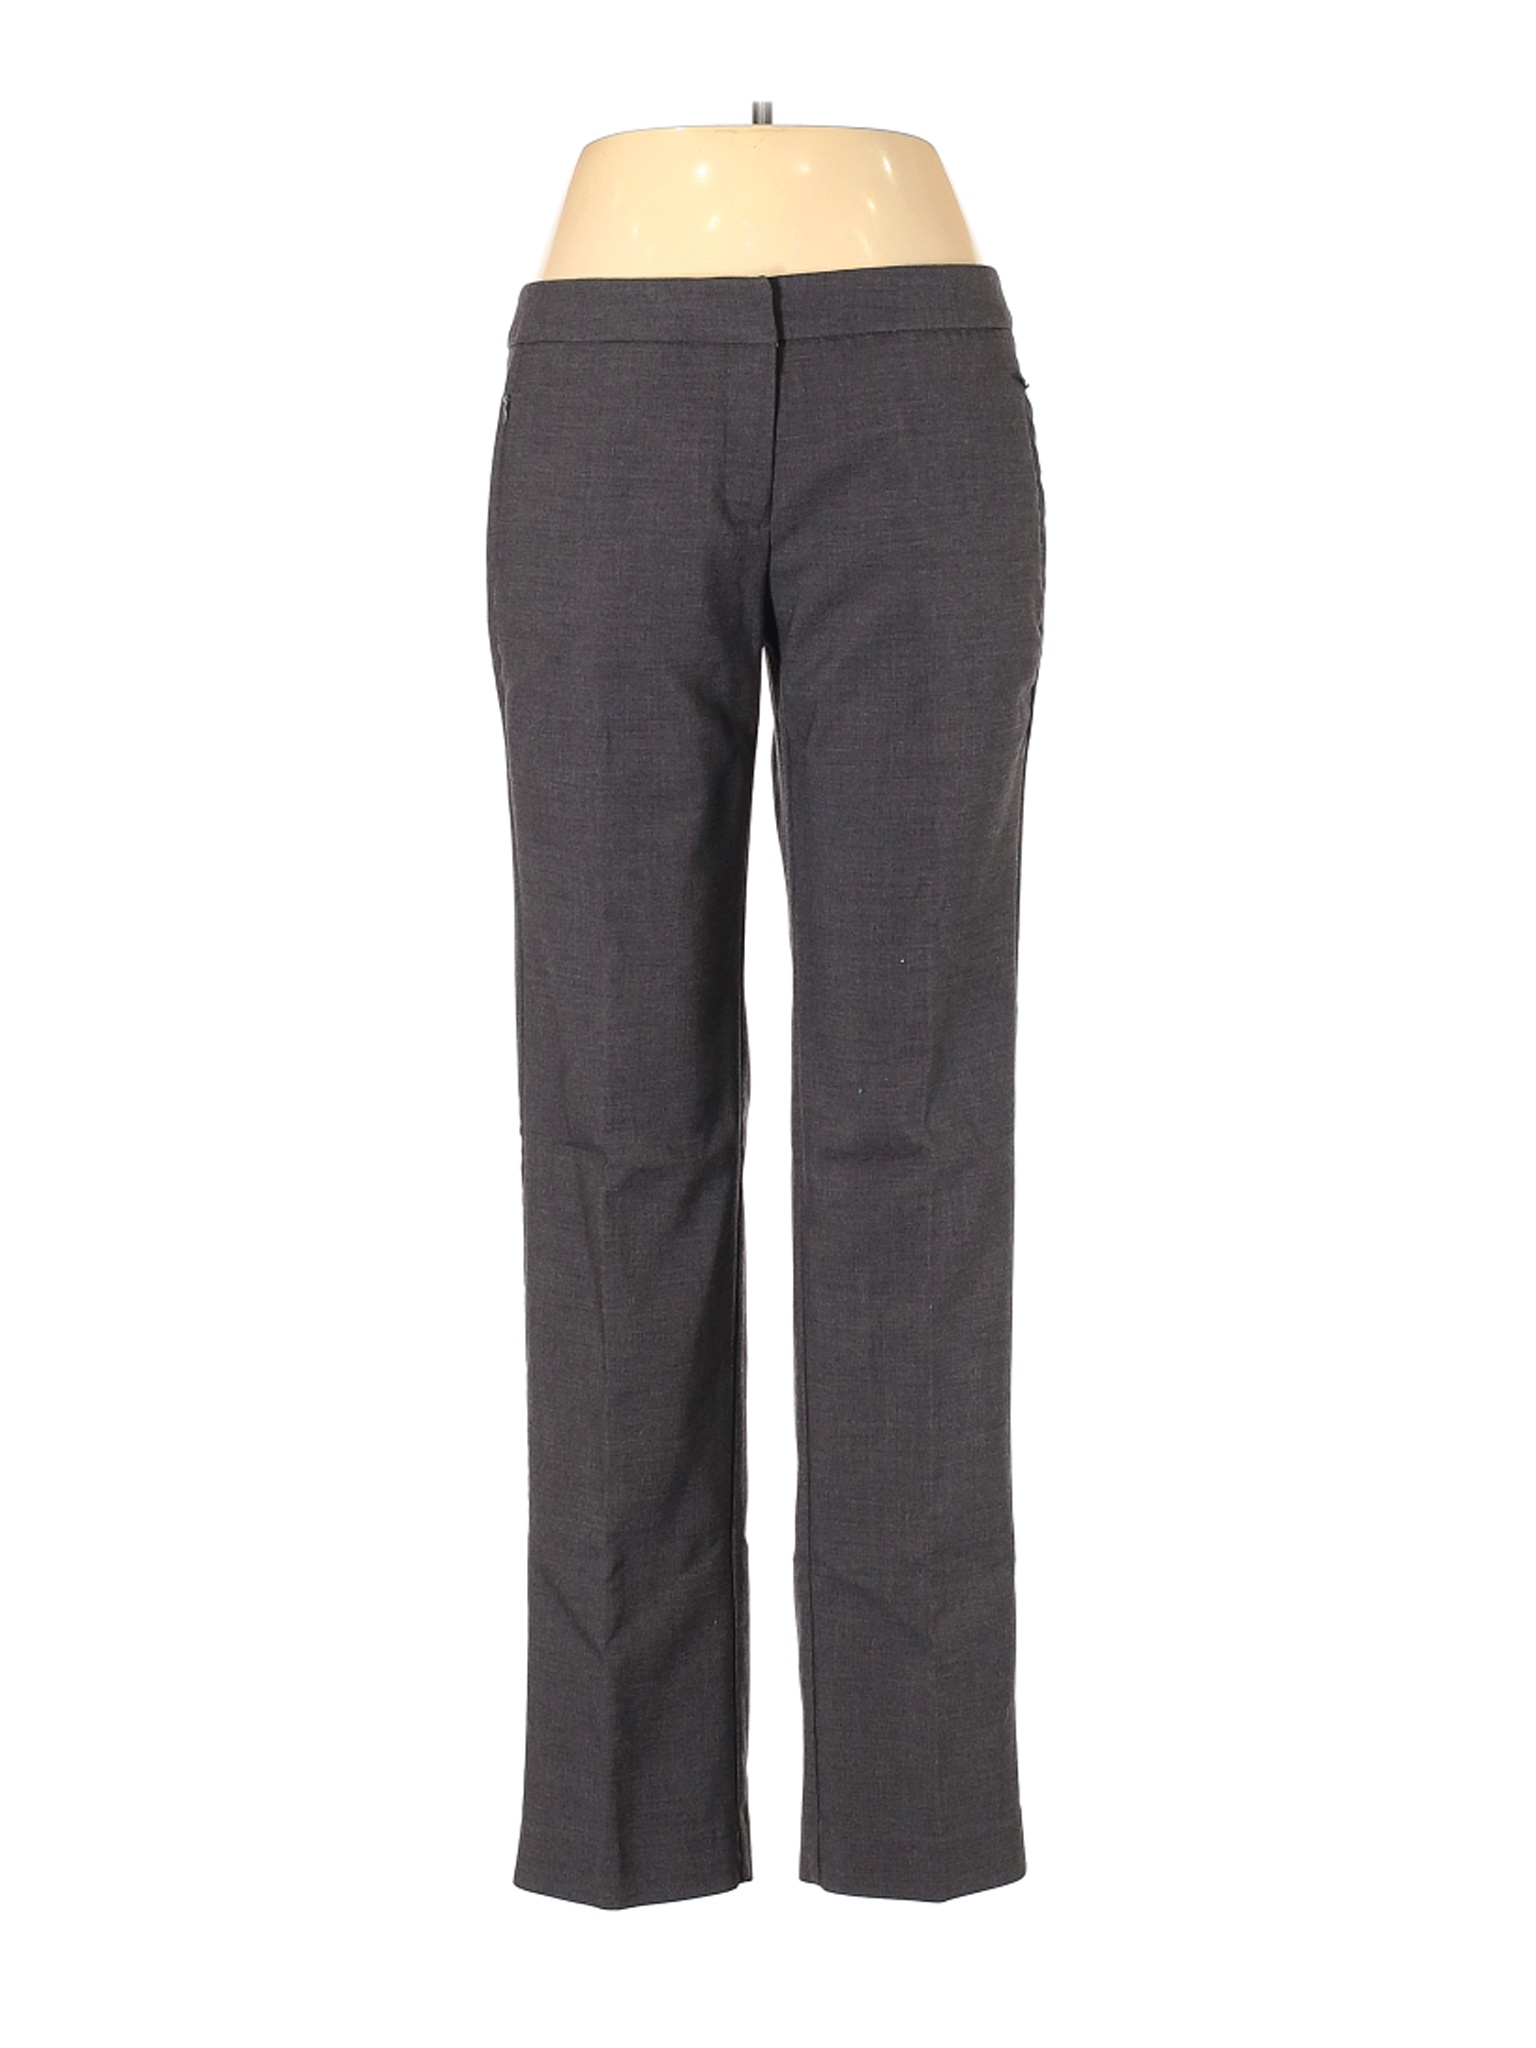 New York & Company Women Gray Dress Pants 10 | eBay